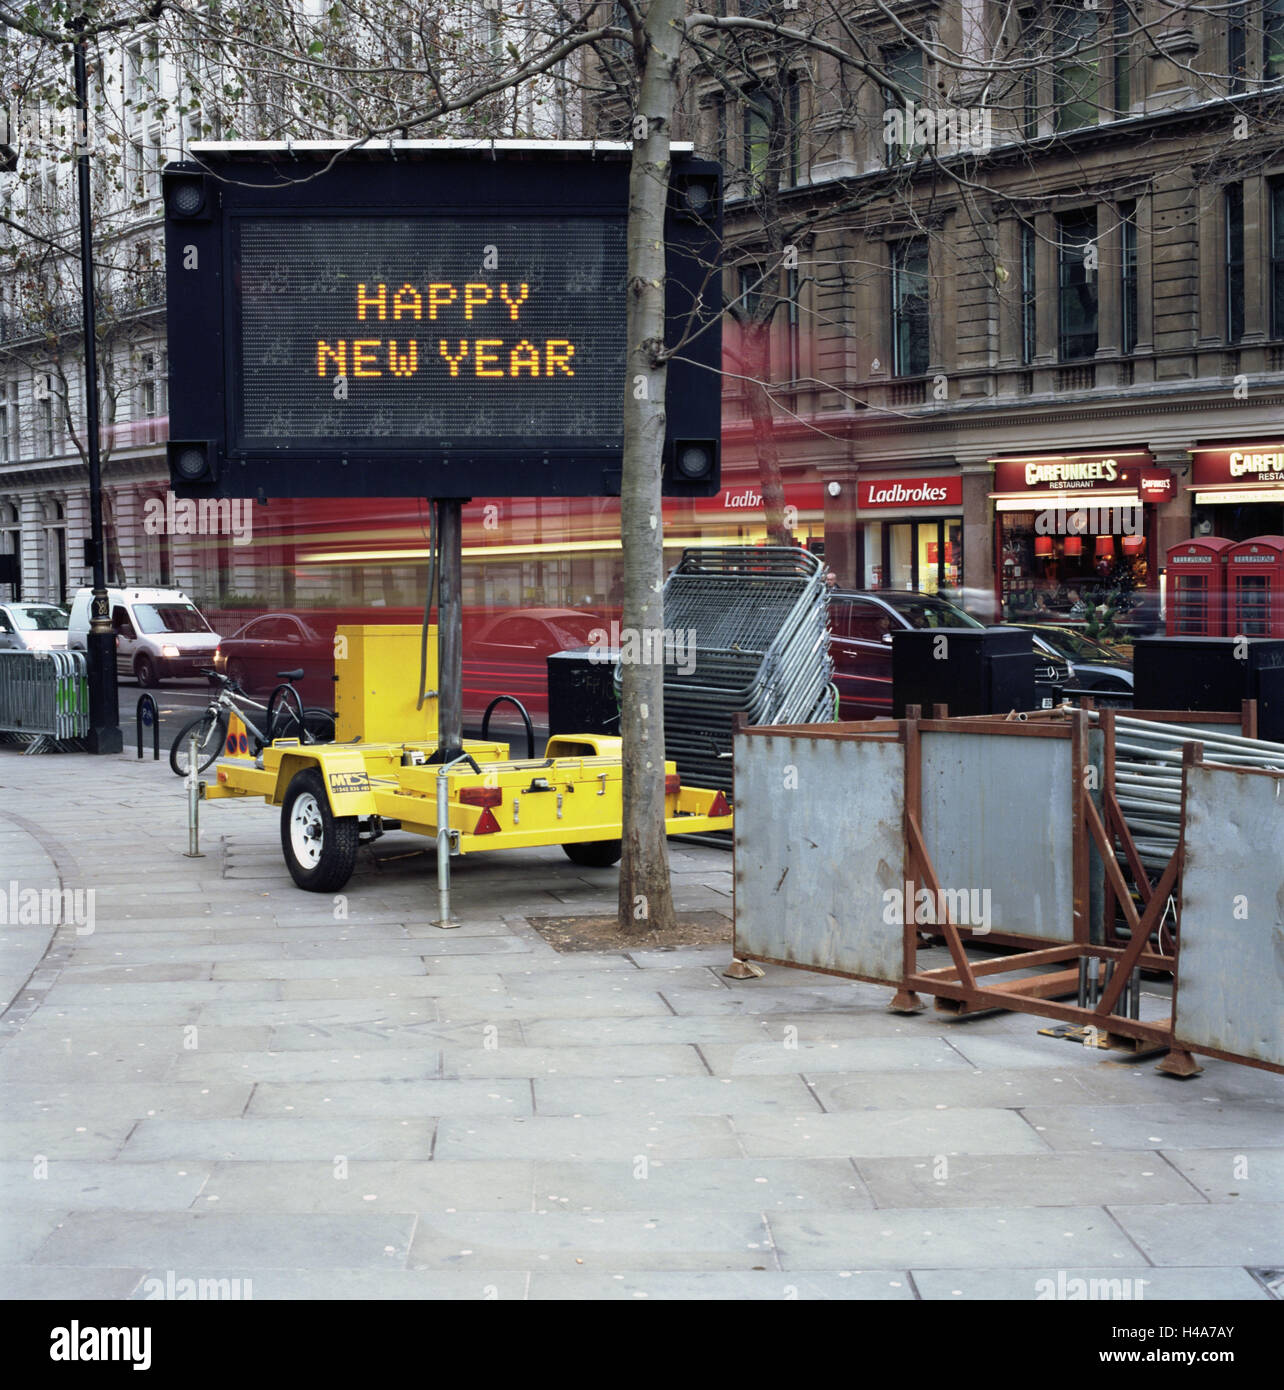 Great Britain, London, New Year, Trafalgar Square, indicating notice board, happy New Year, Stock Photo